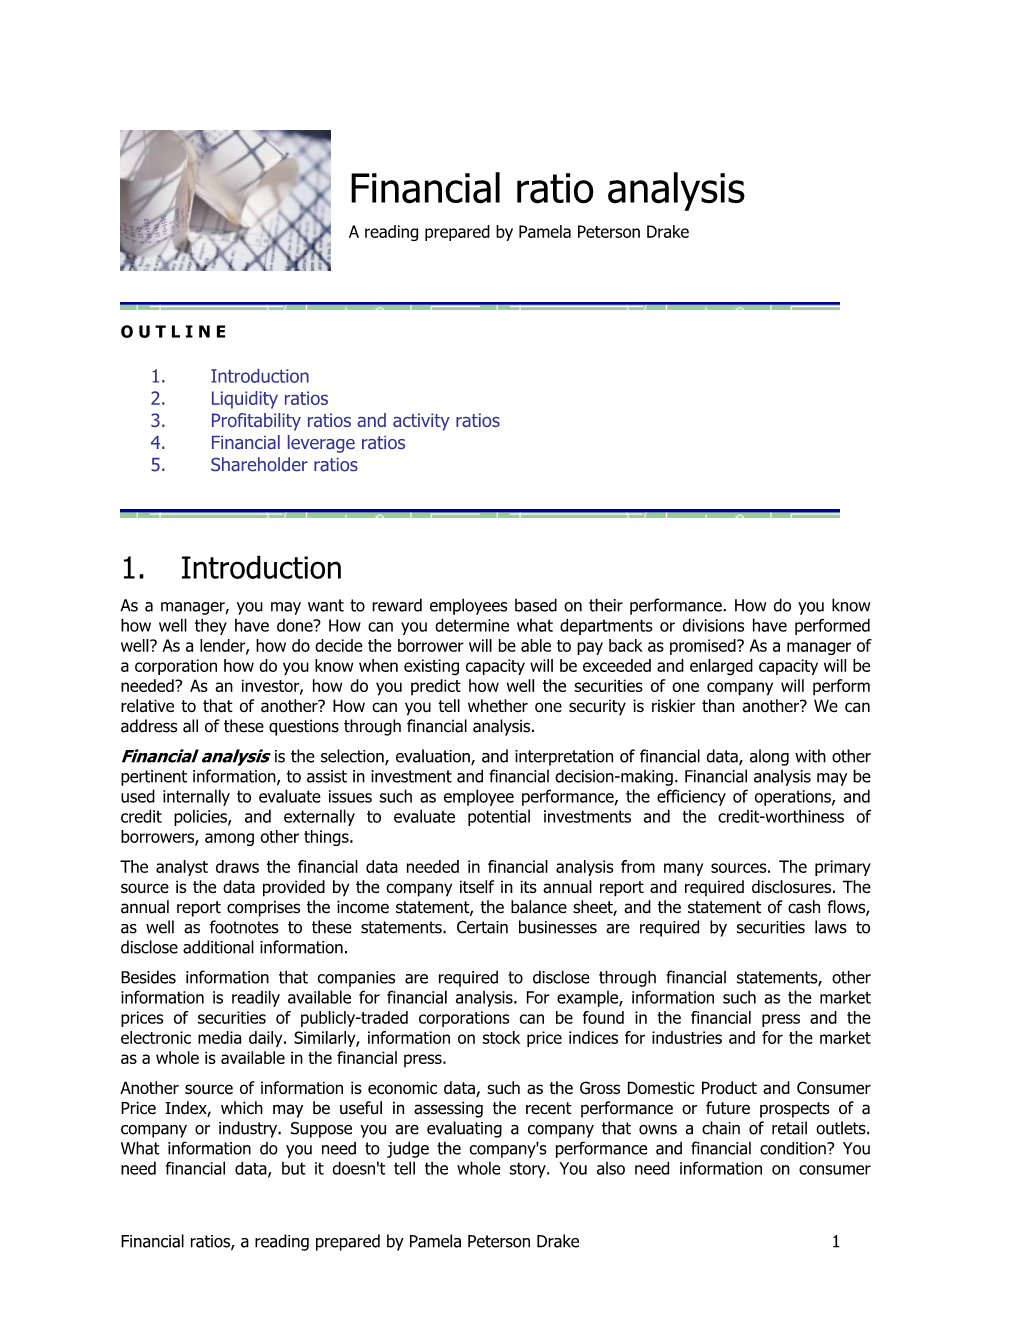 Financial Ratio Analysis a Reading Prepared by Pamela Peterson Drake